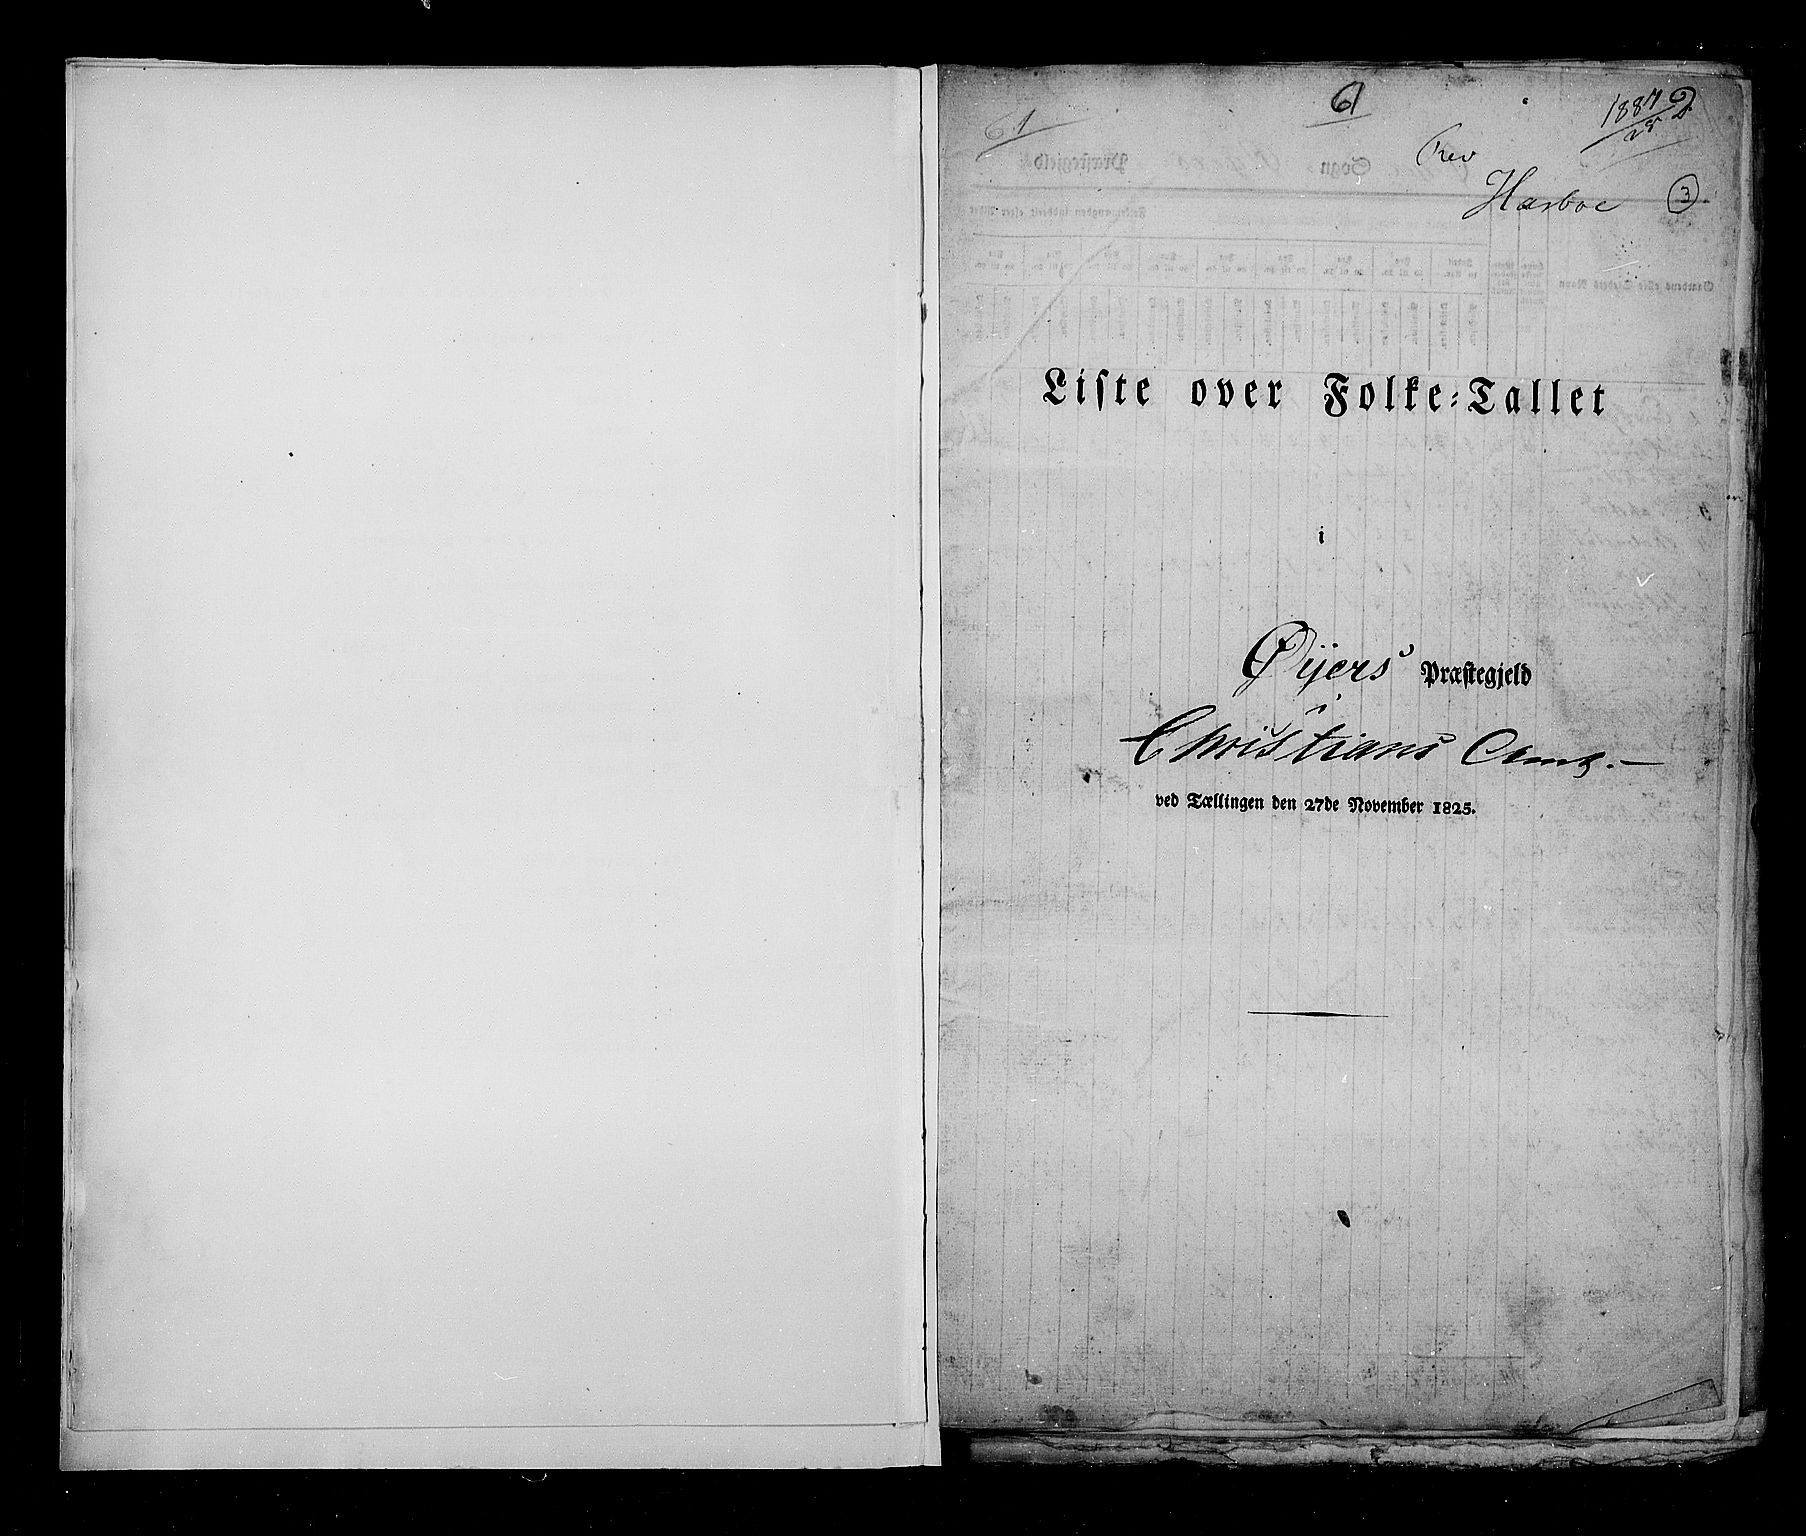 RA, Census 1825, vol. 6: Kristians amt, 1825, p. 3